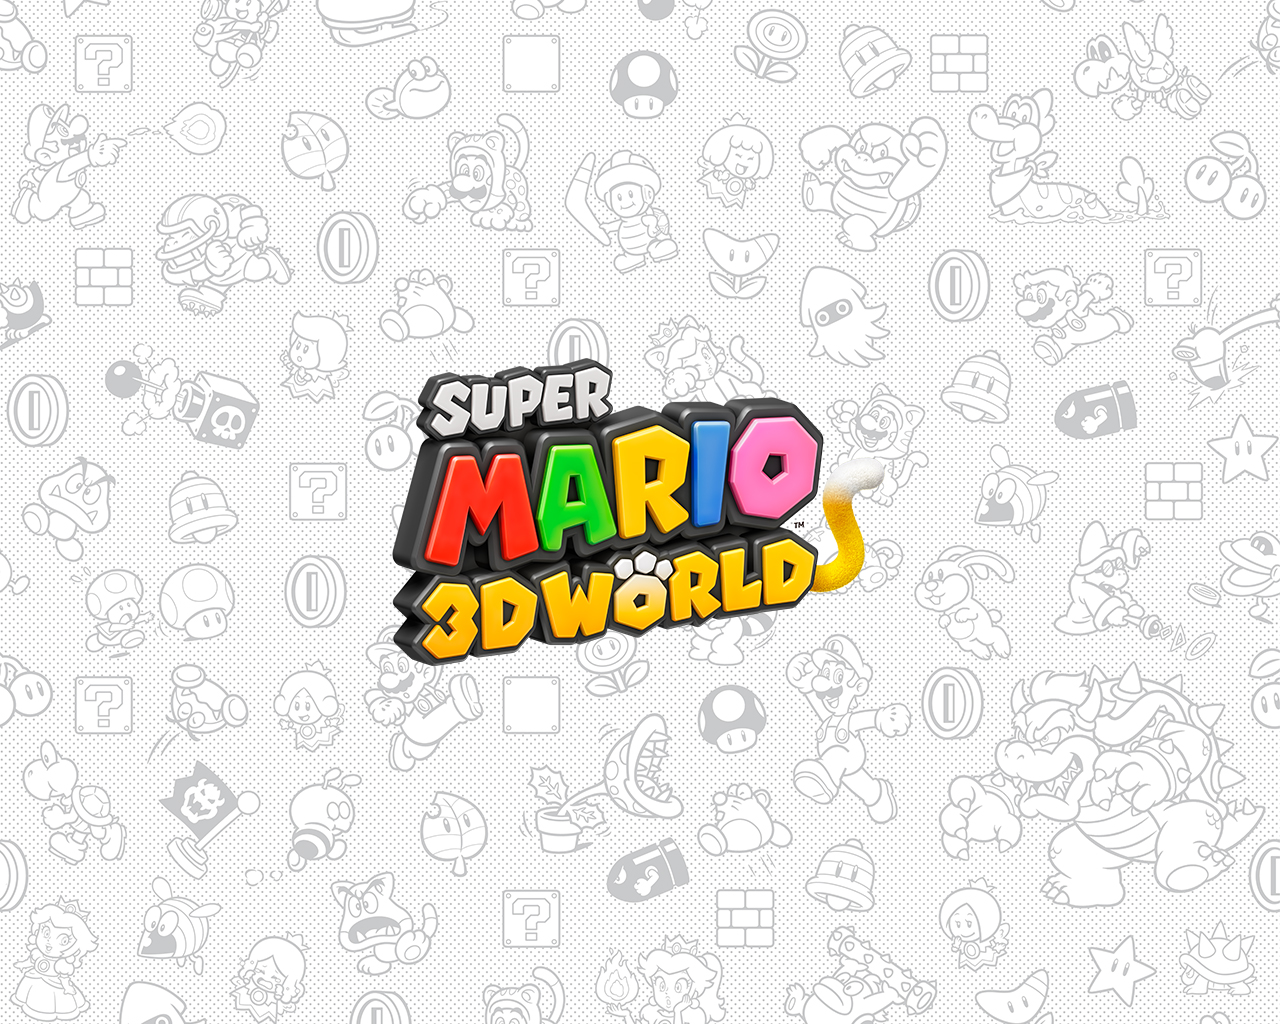 Super Mario 3d World фон